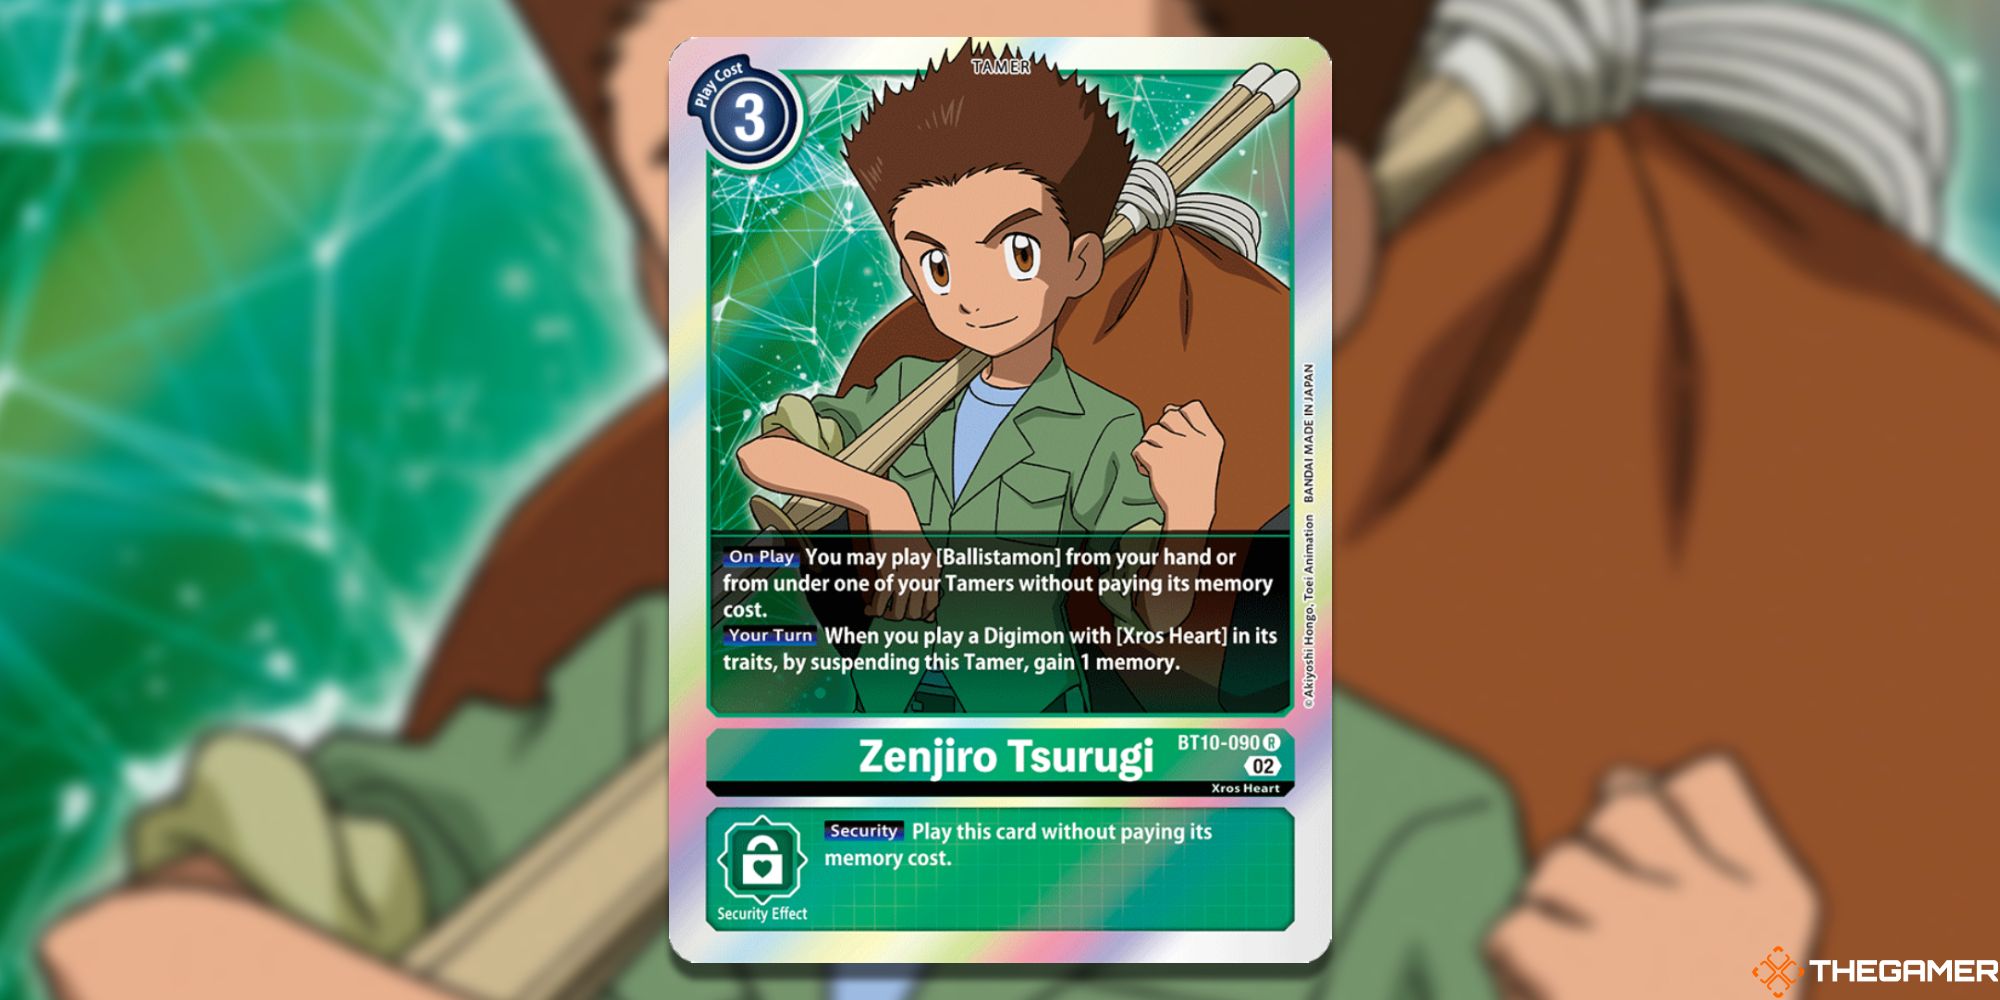 zenjiro tsurugi image with blurred background digimon card game